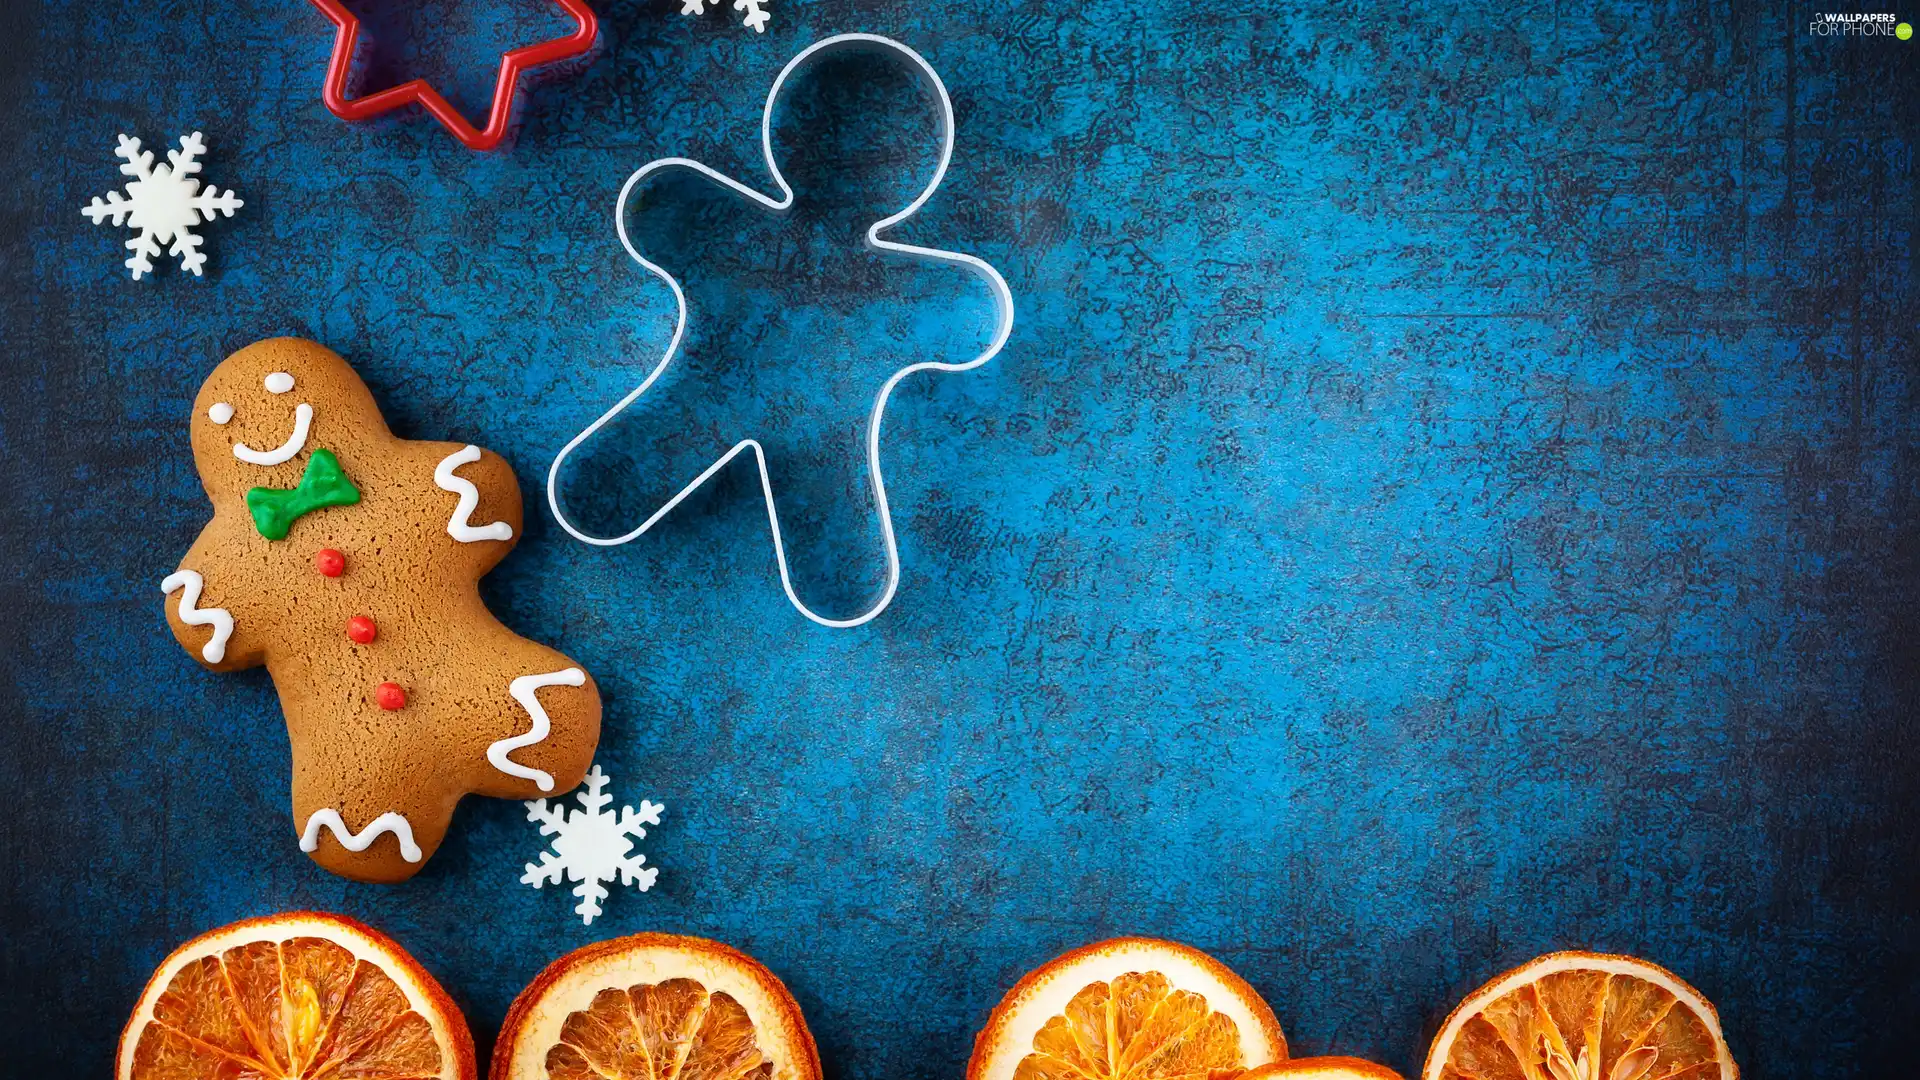 slices, Gingerbread, molds, M&Ms mate, festive, orange, Snow White